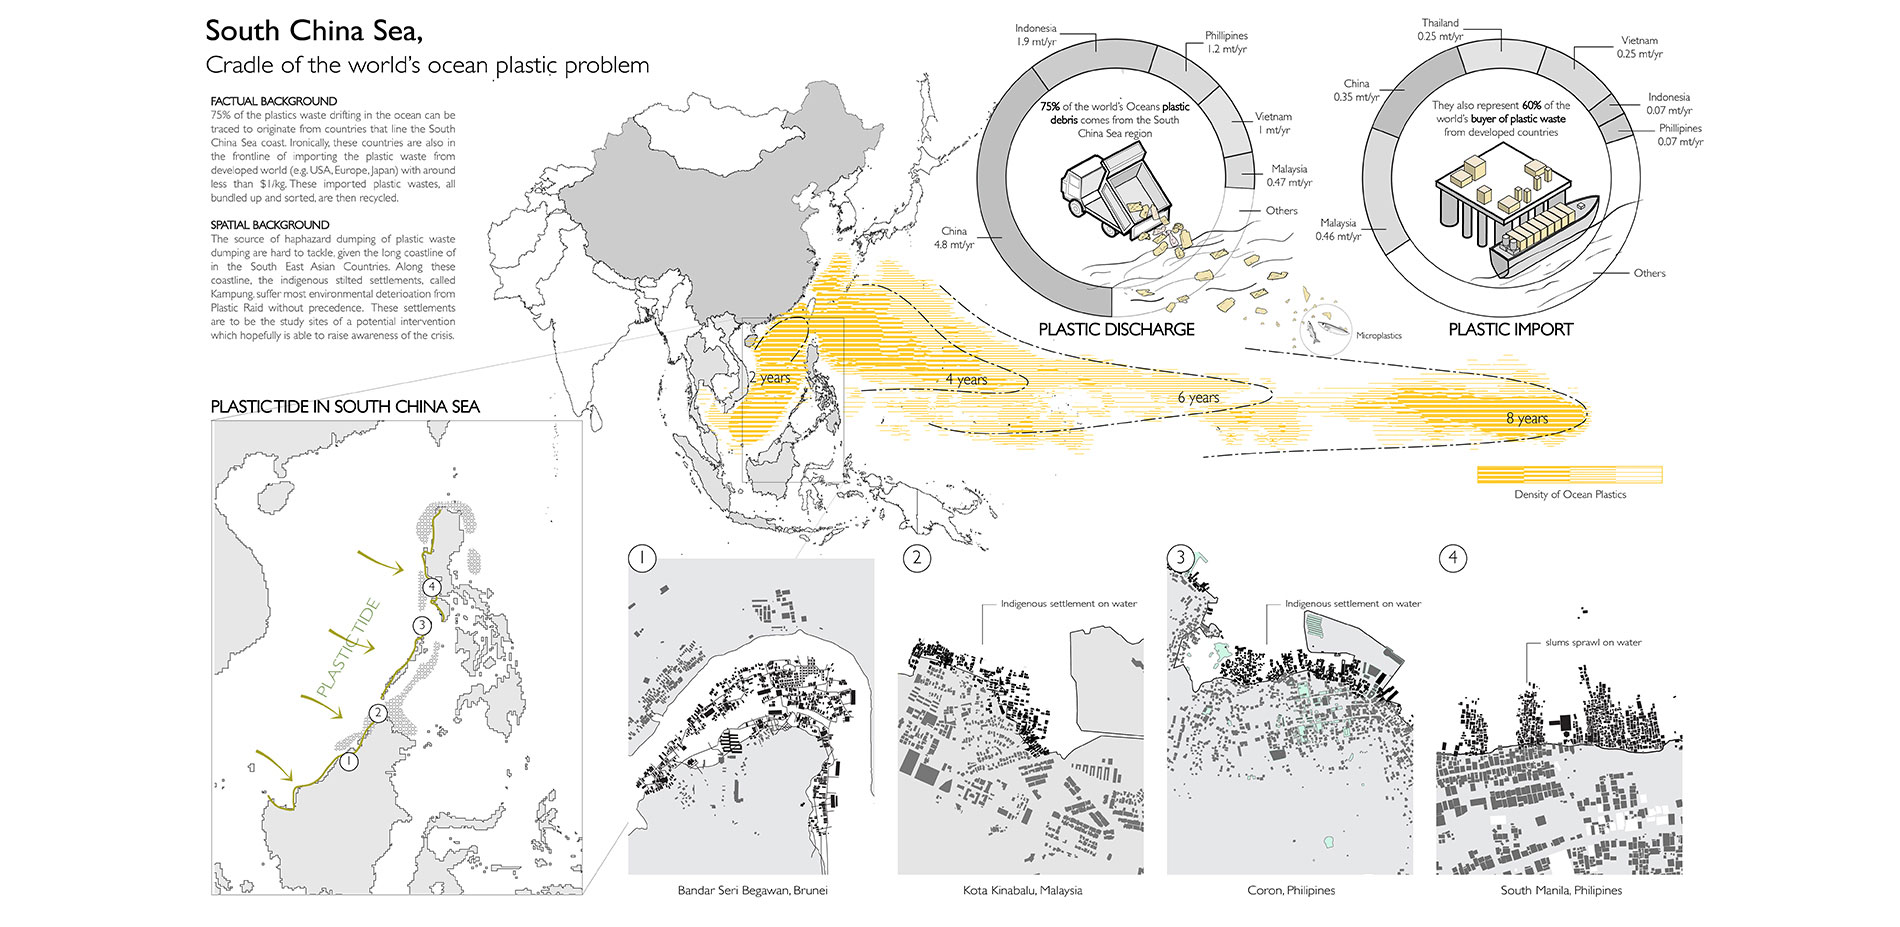 02 South China Sea - Cradle of World's ocean plastic problem